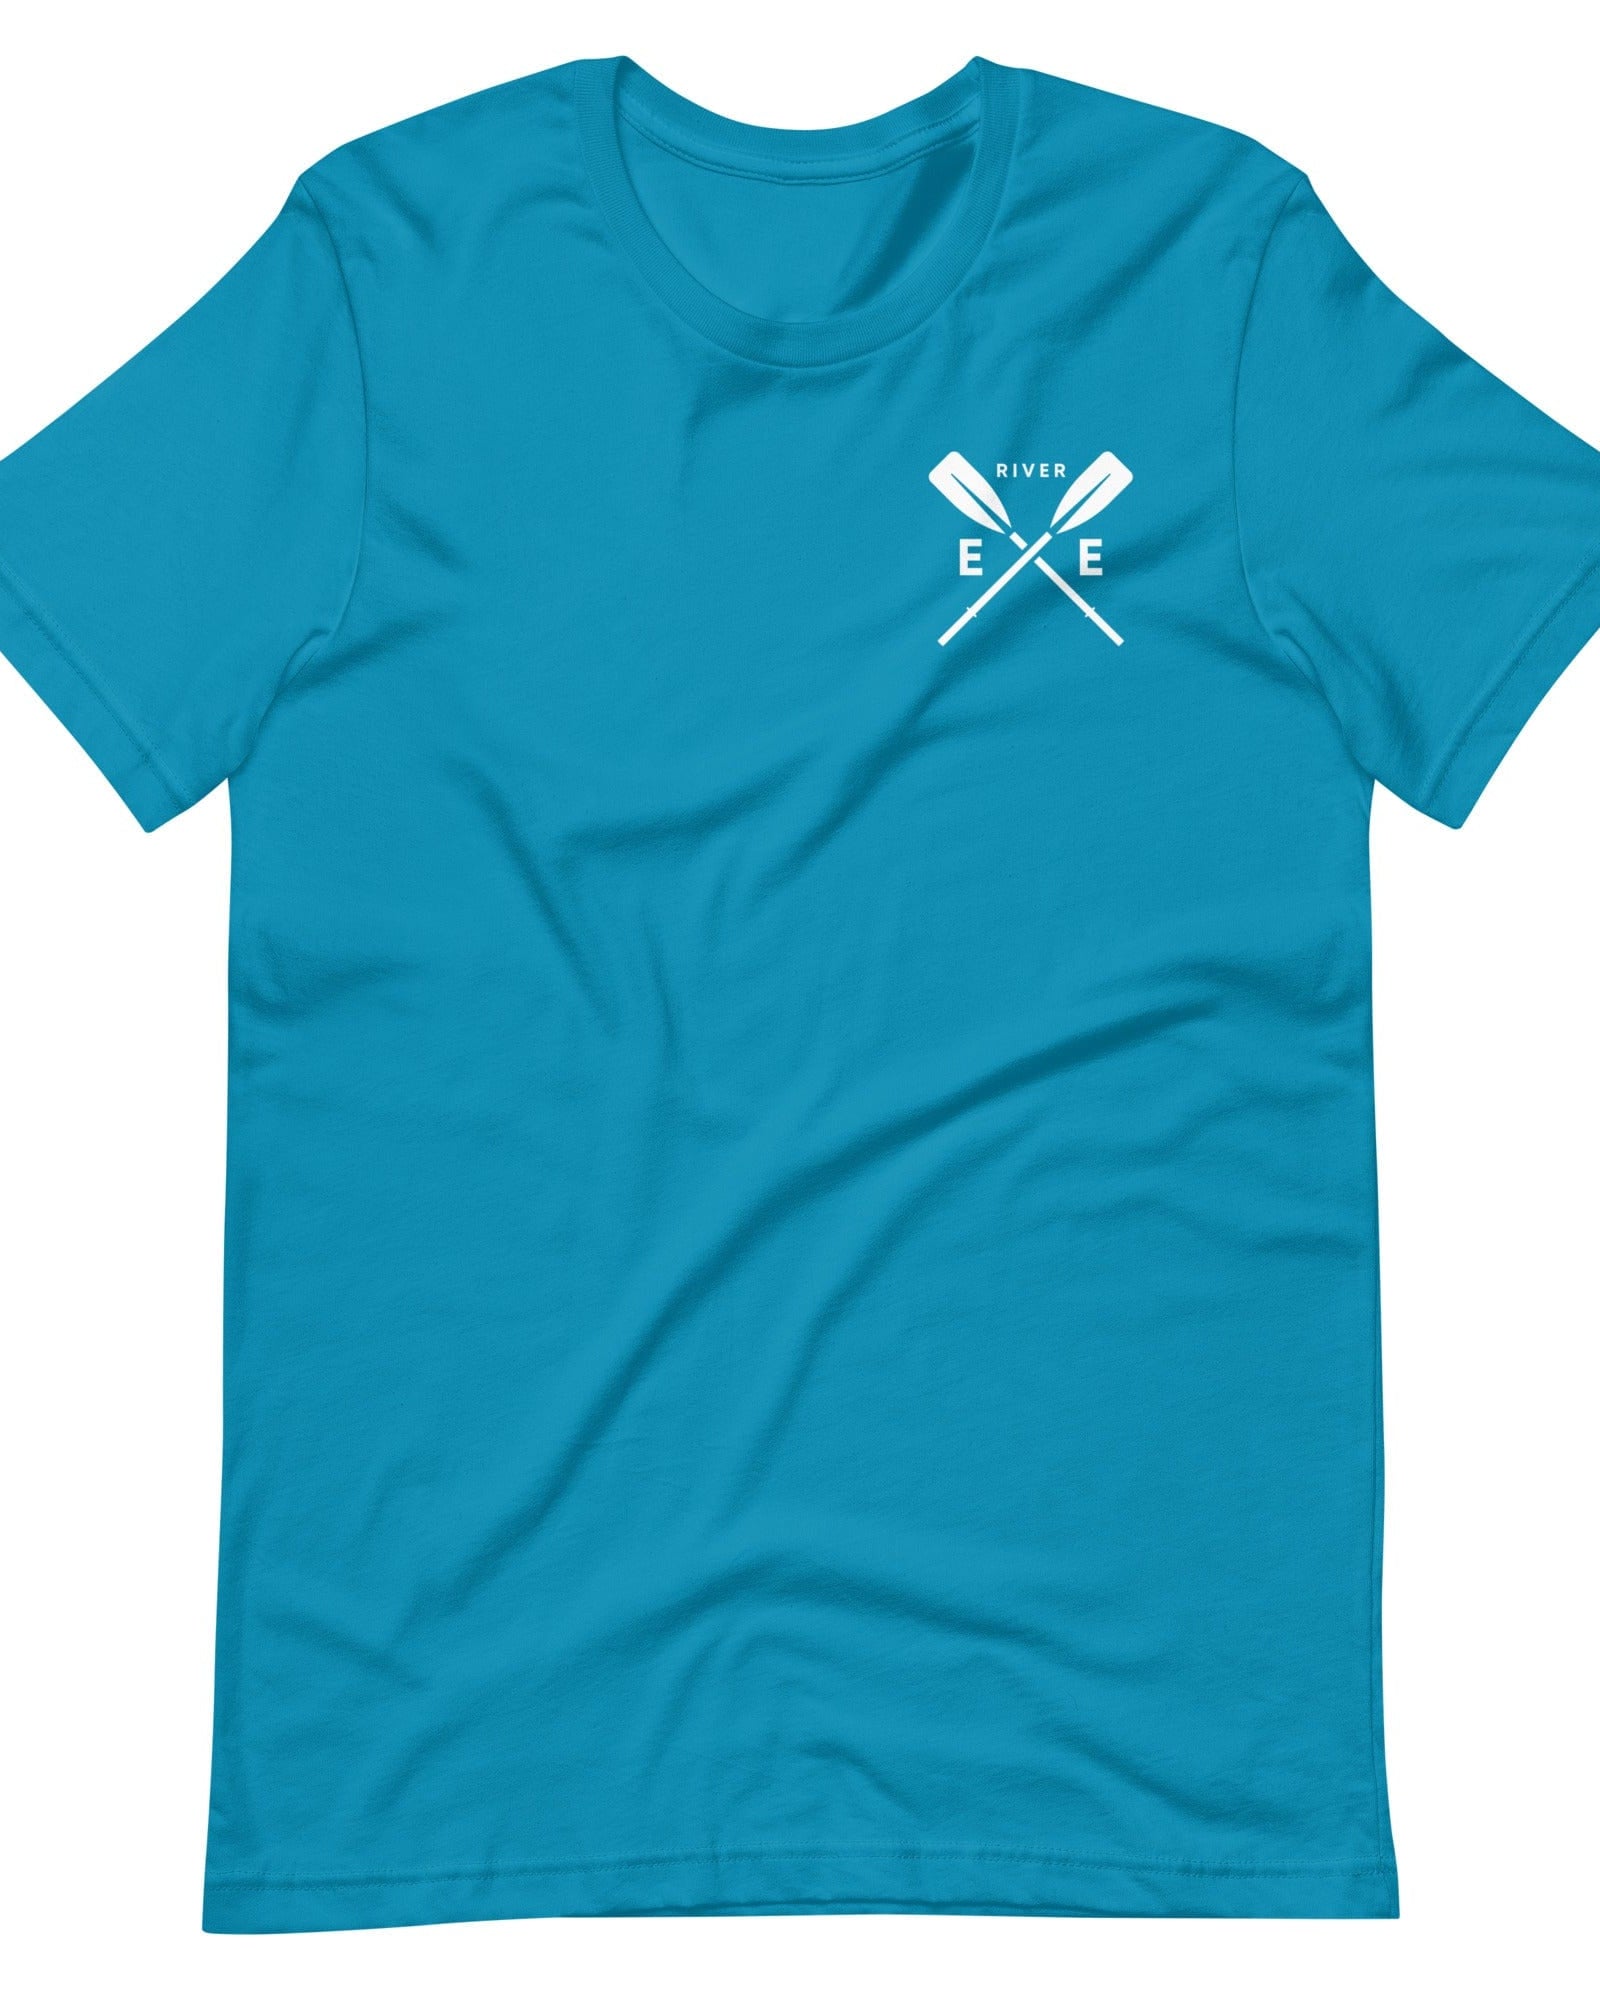 River Exe T-shirt | Exeter Gift Shop Aqua / S Shirts & Tops Jolly & Goode